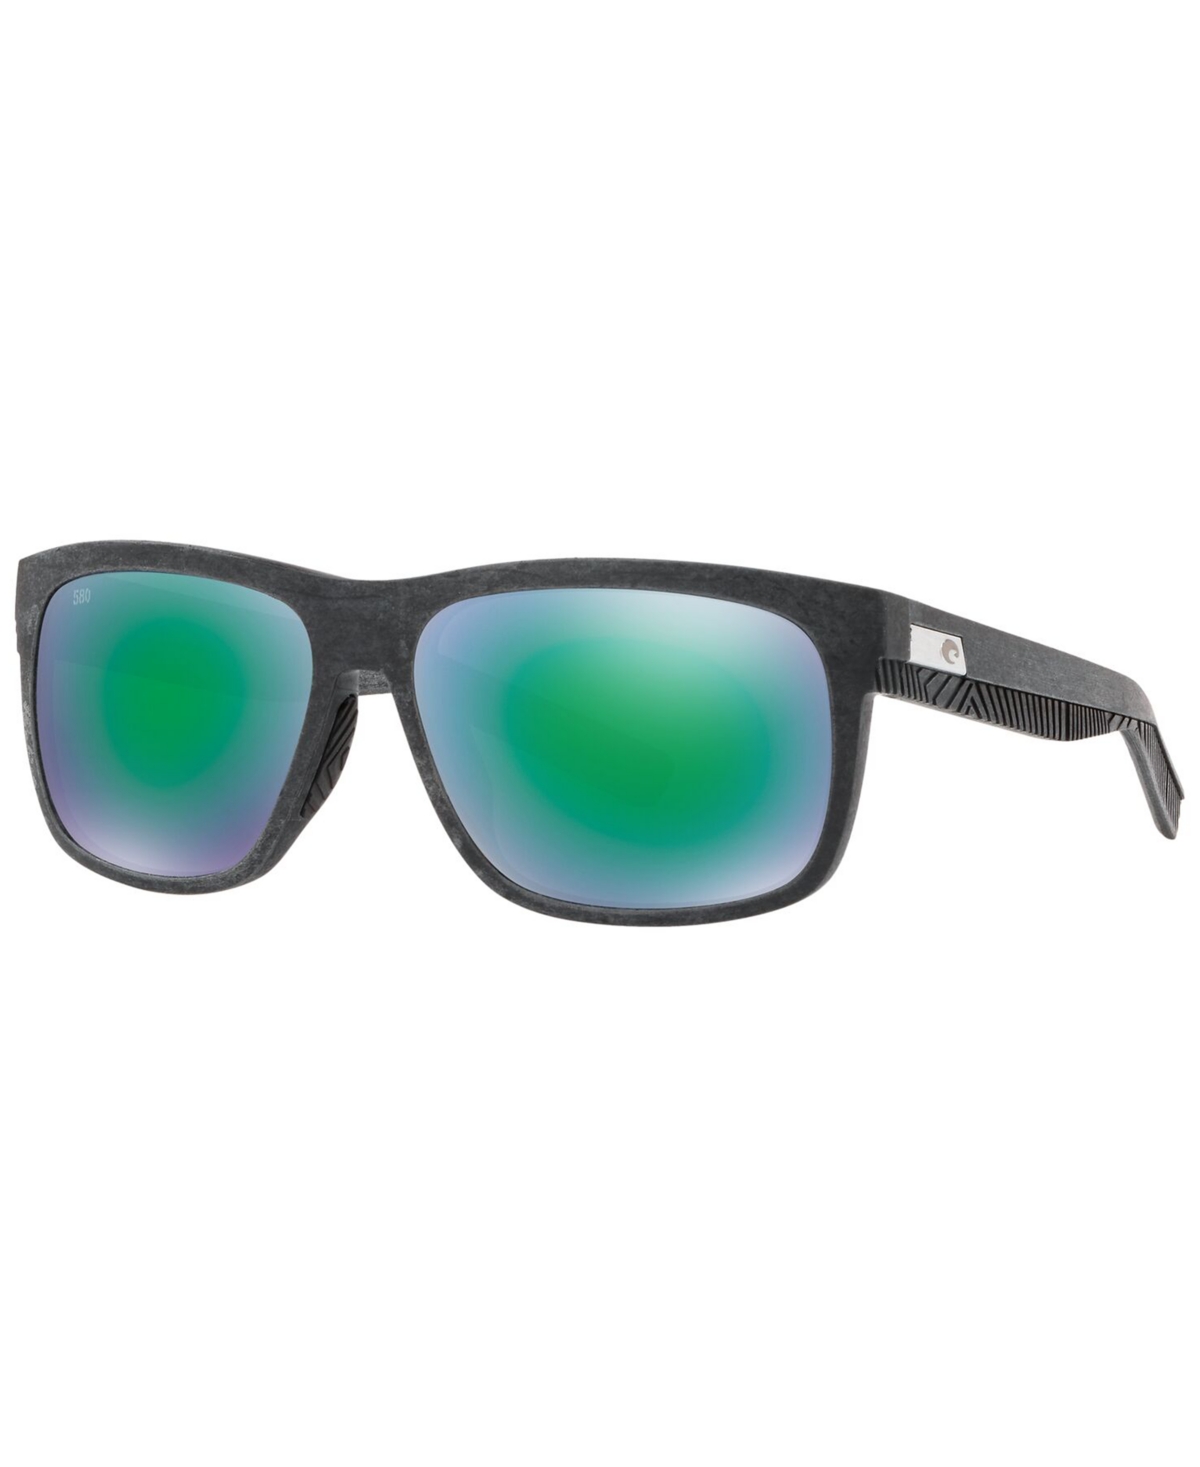 Men's Polarized Sunglasses, Baffin 58 - BLACK/BLUE